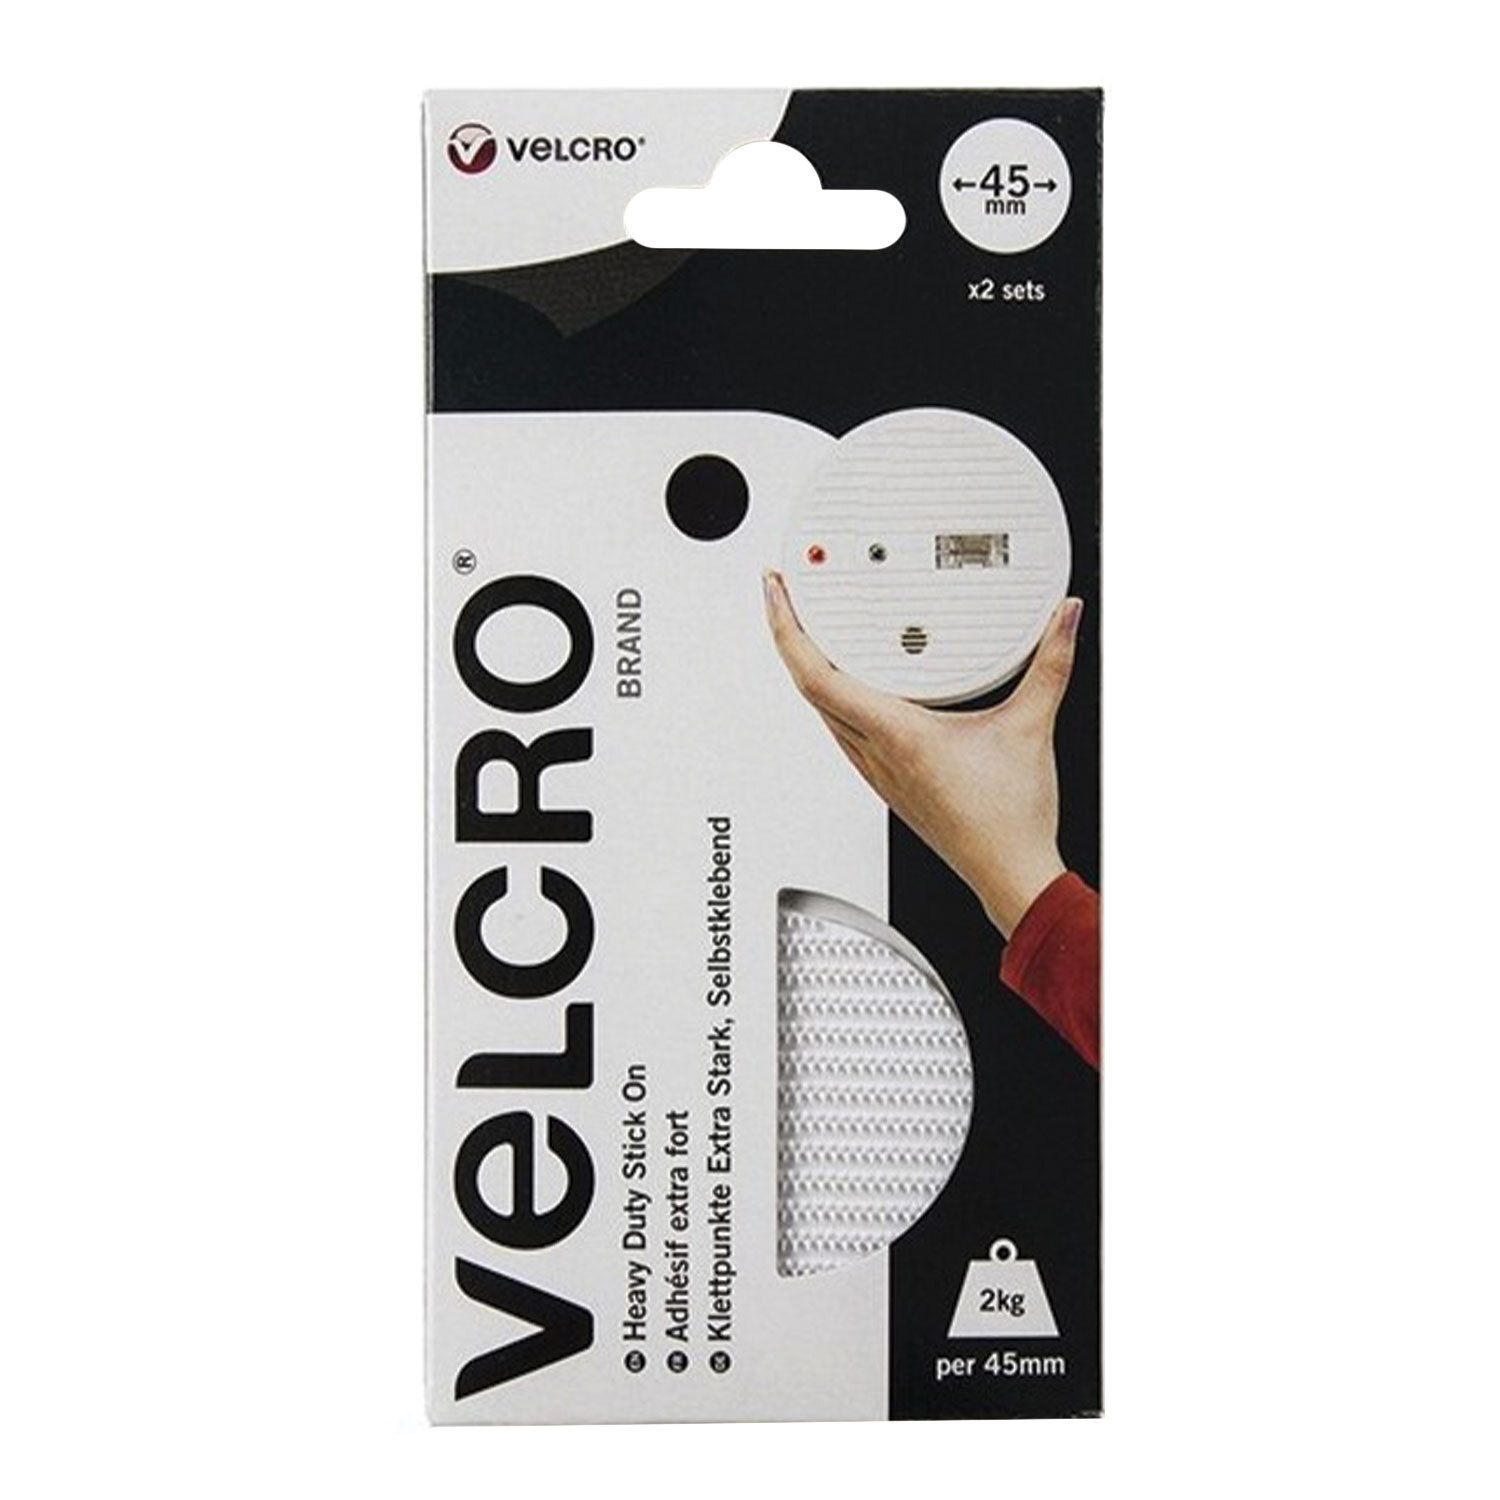 VELCRO® Brand Heavy Duty Coins - White